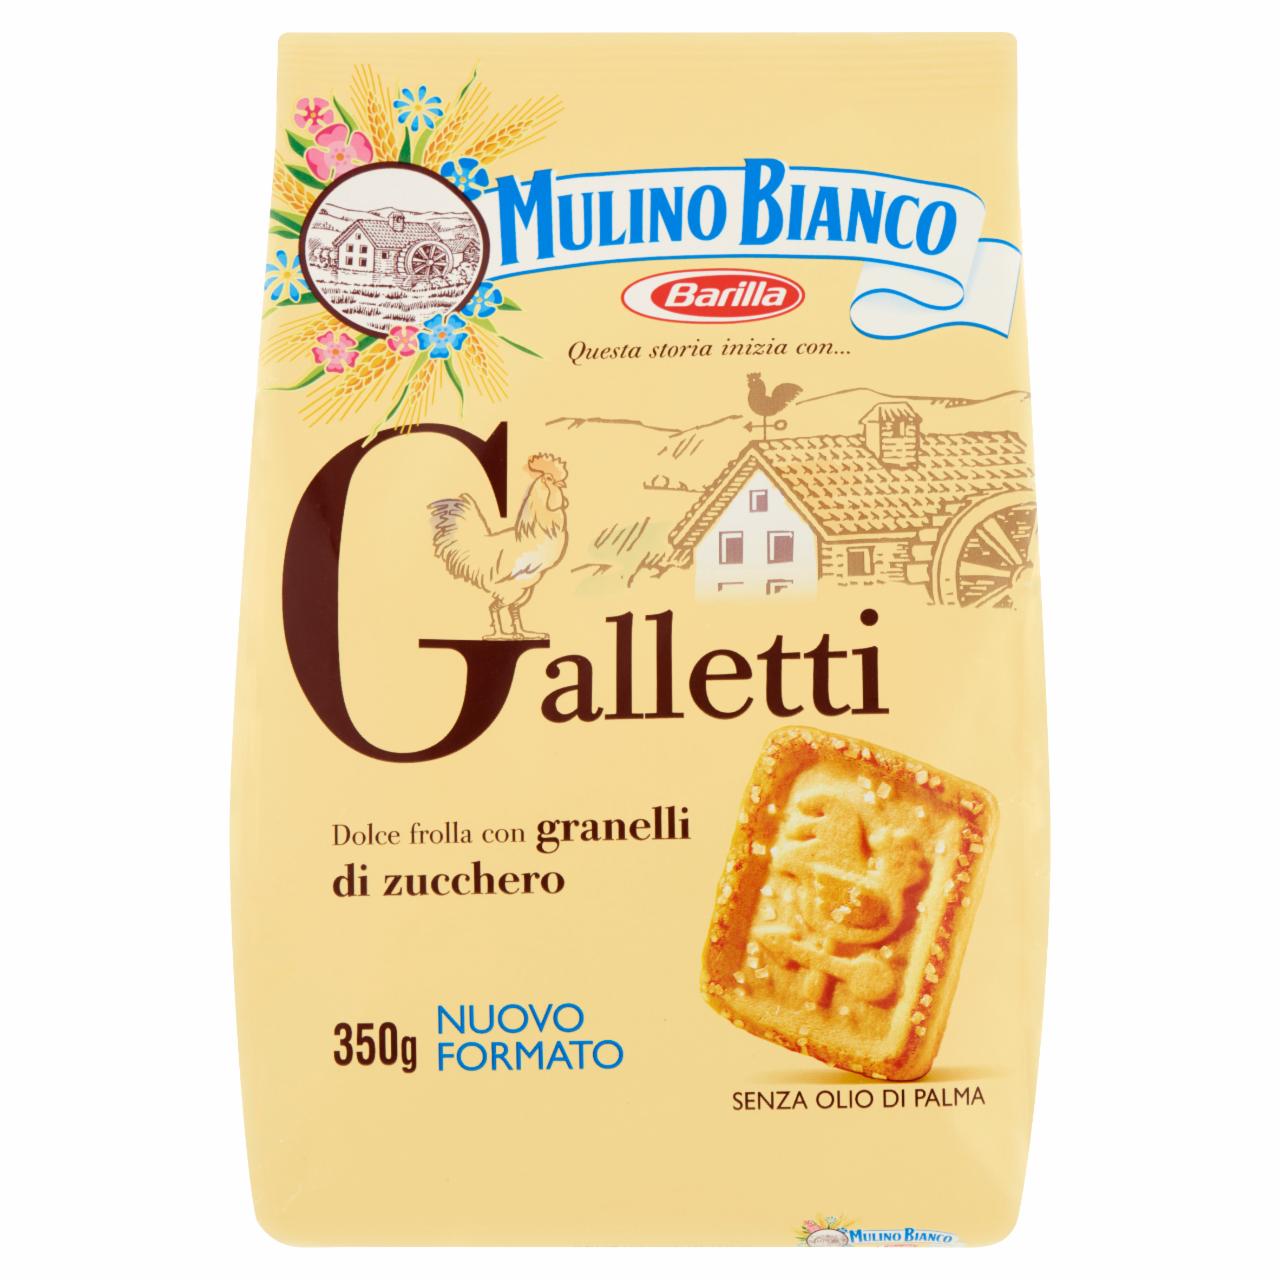 Képek - Mulino Bianco Galletti édes keksz cukorkristályokkal 350 g